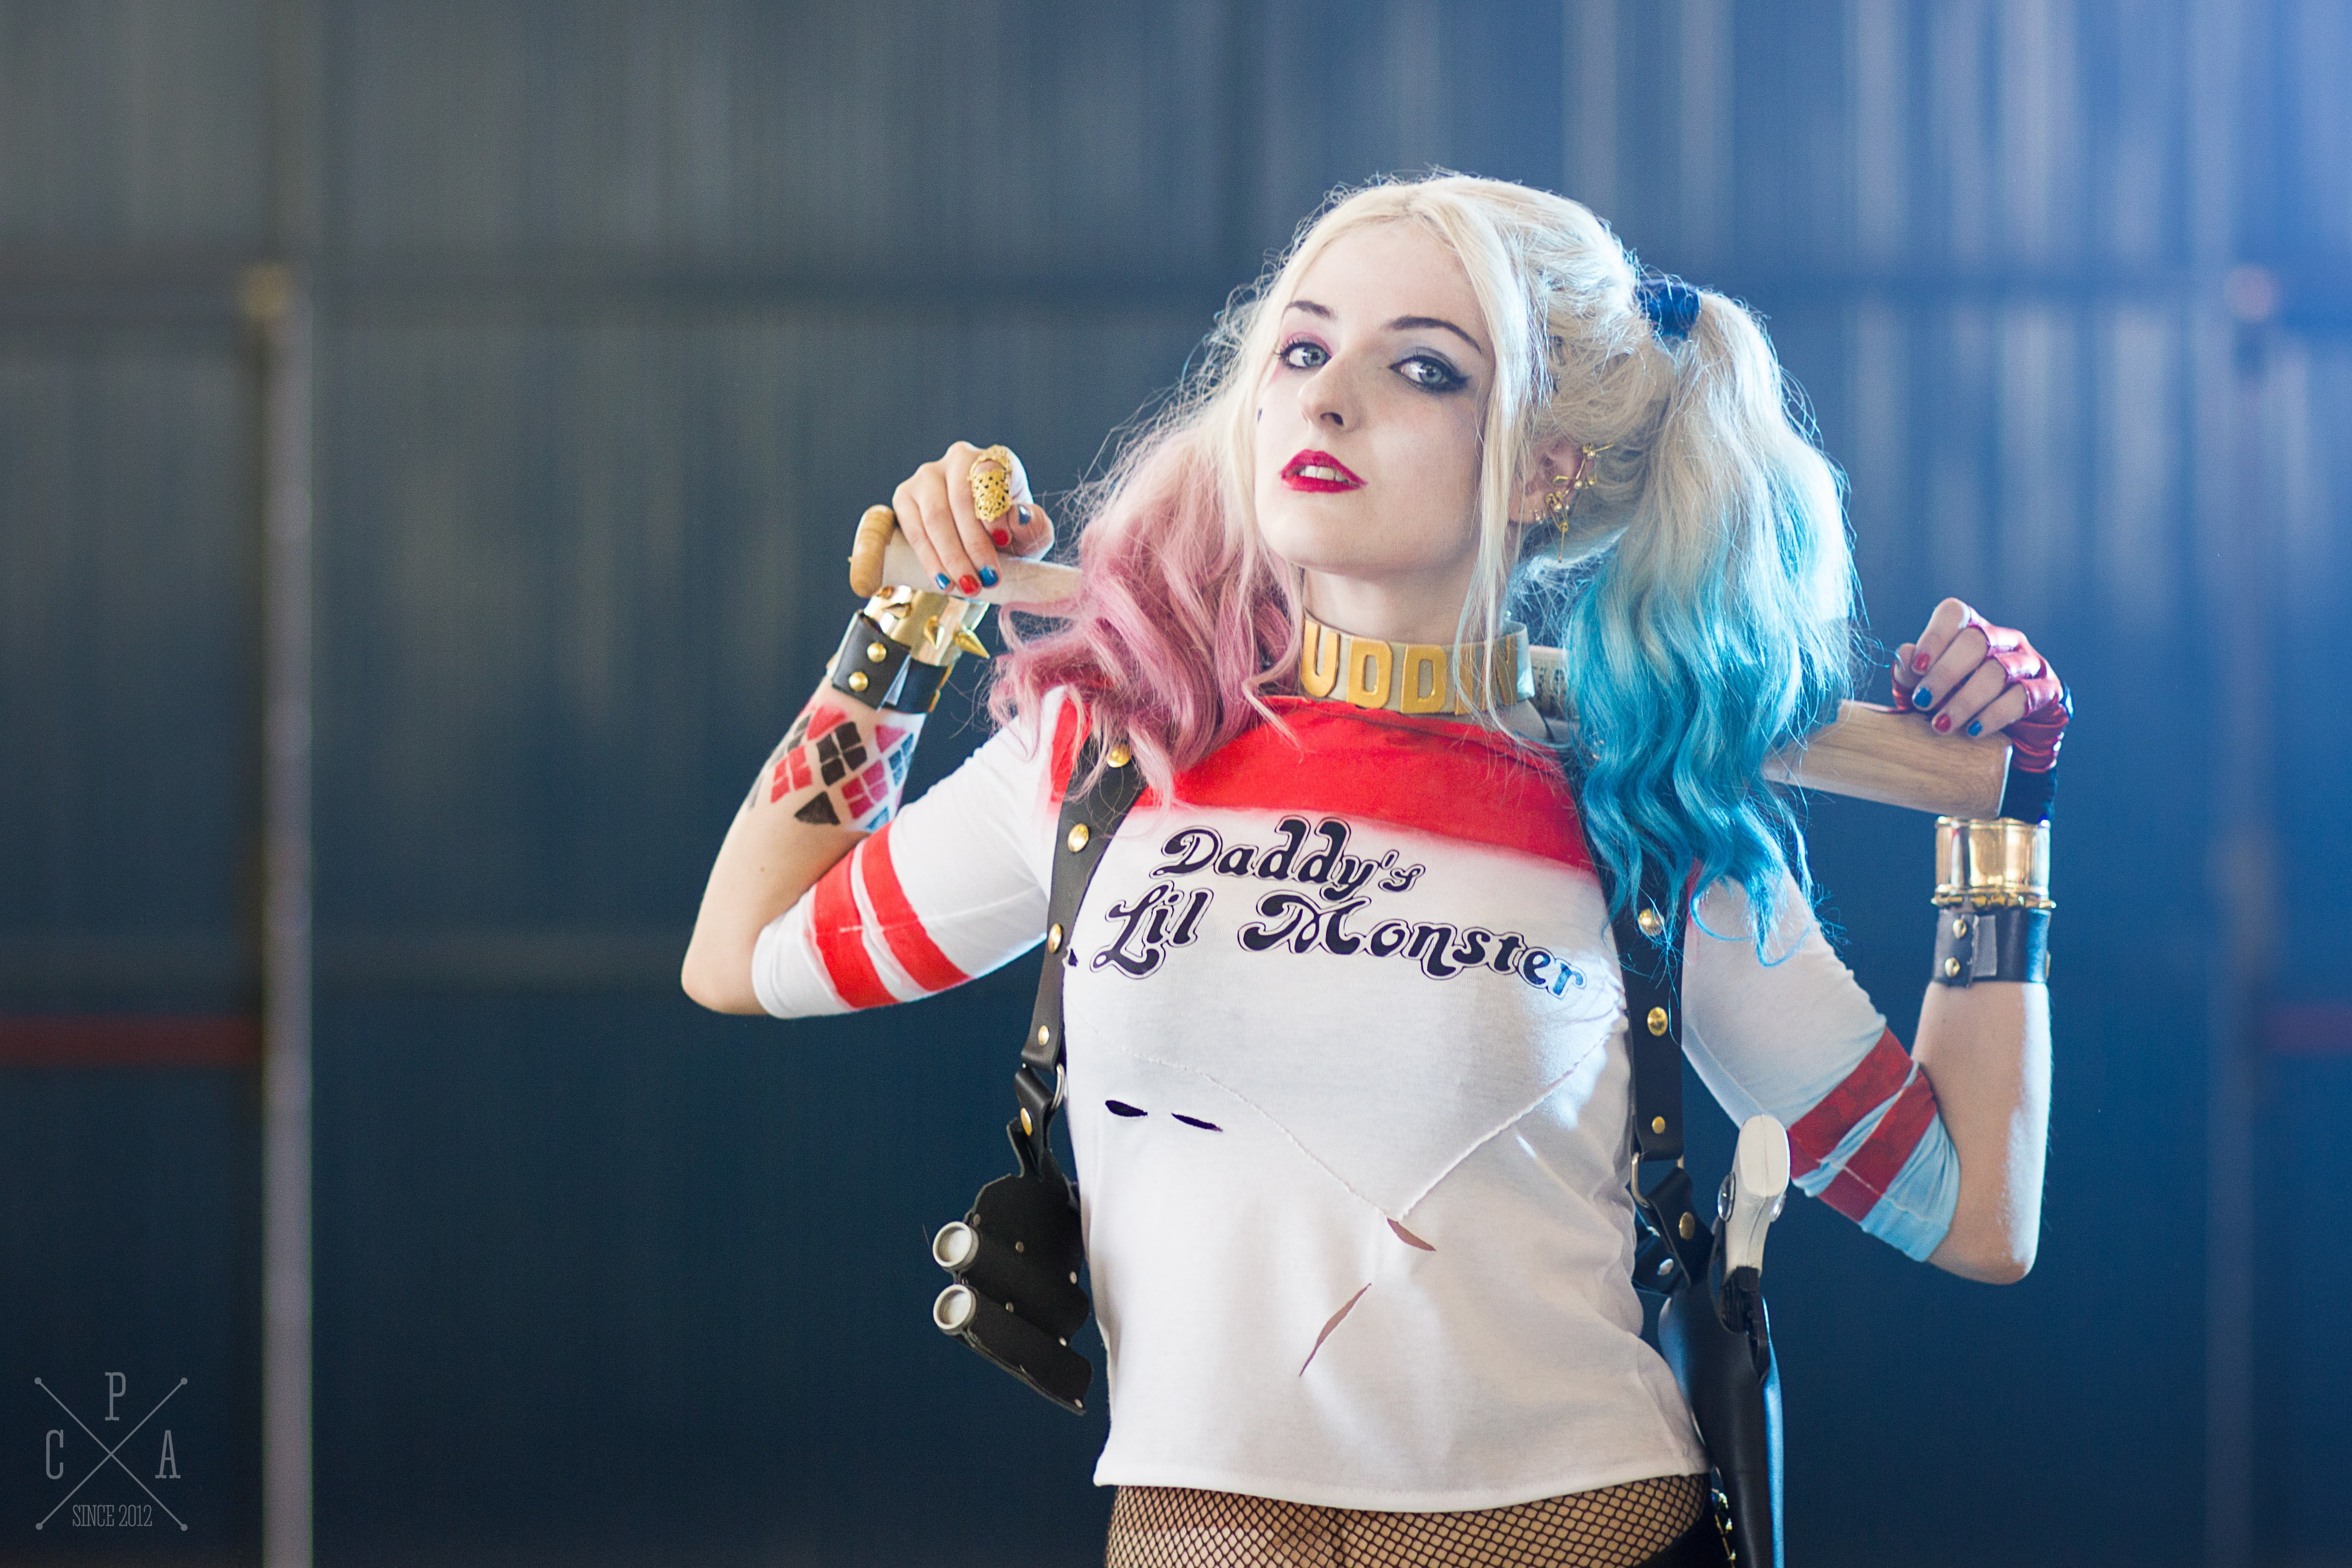 HarleyQuinn holding baseball bat, Harley Quinn, cosplay, DC Comics